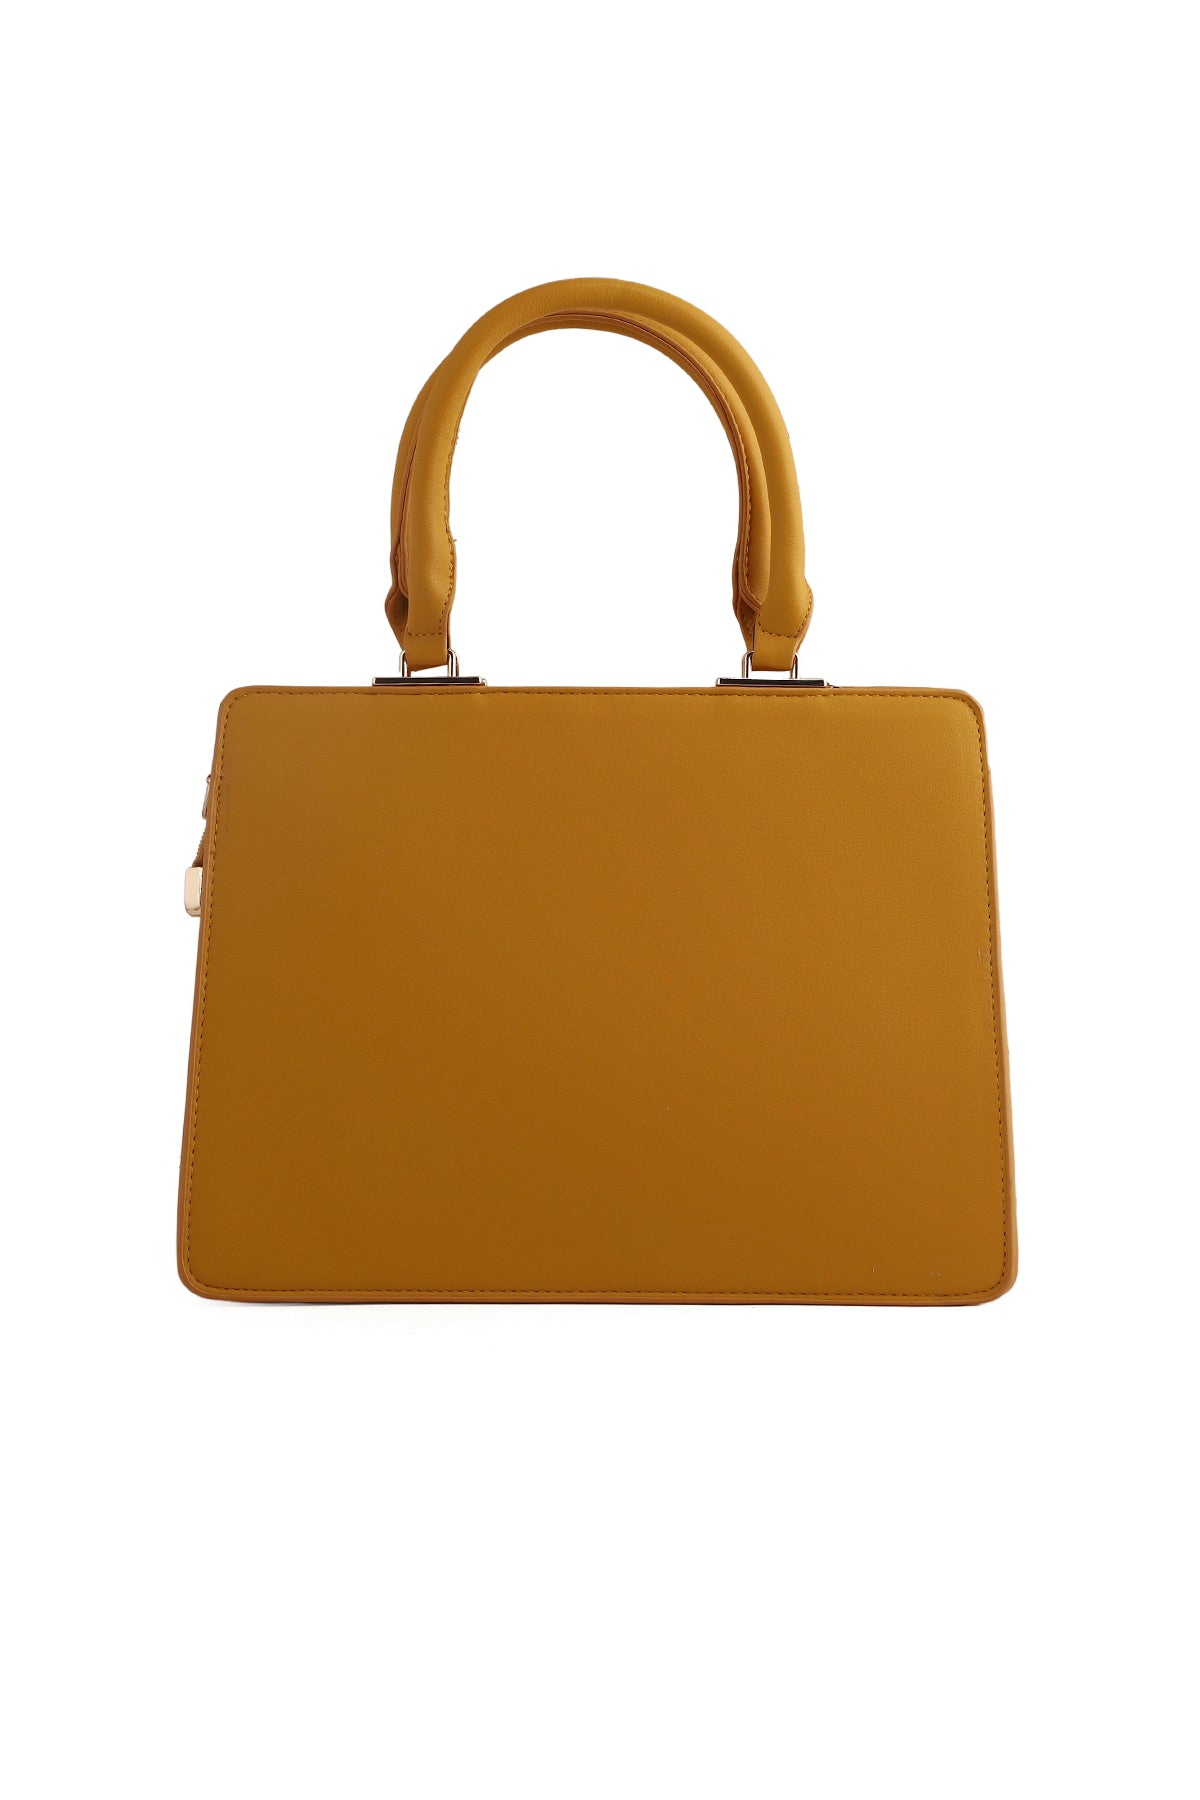 Formal Tote Hand Bags B14990-Yellow